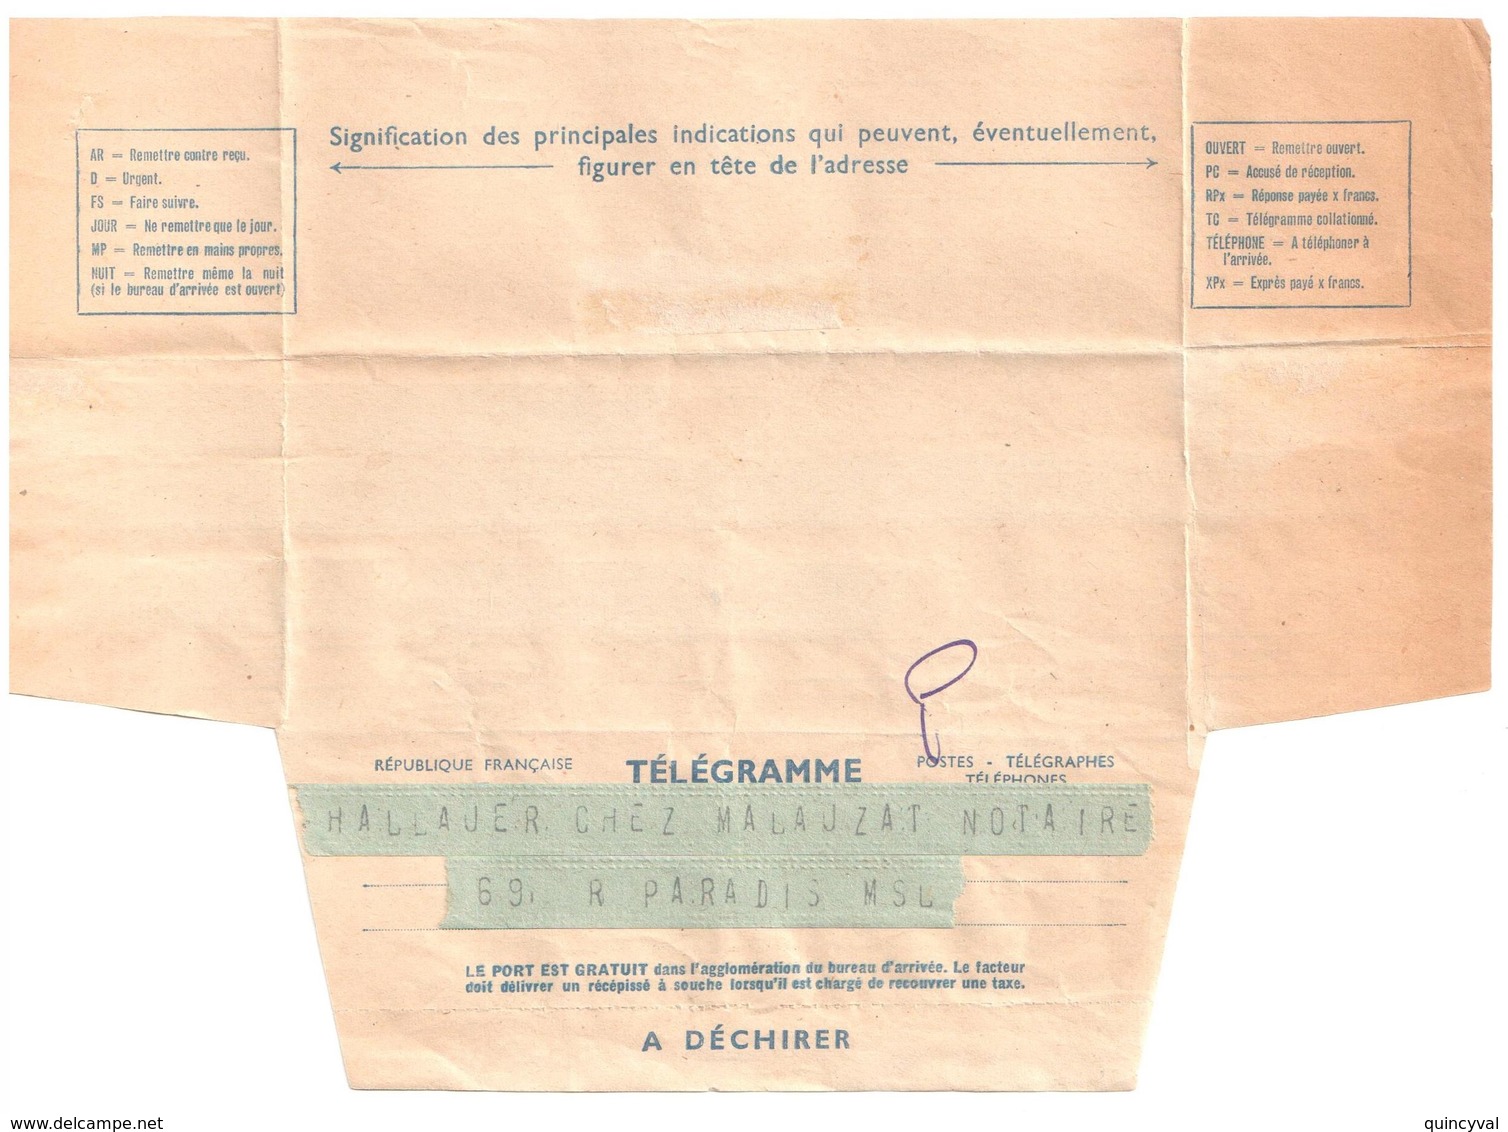 MARSEILLE St FERREL Télégramme D'Avocat   Notaire Malaujat Aff Hallauer Ob 317 1947 Formule 704 Oberthur 511 050I - Telegraph And Telephone